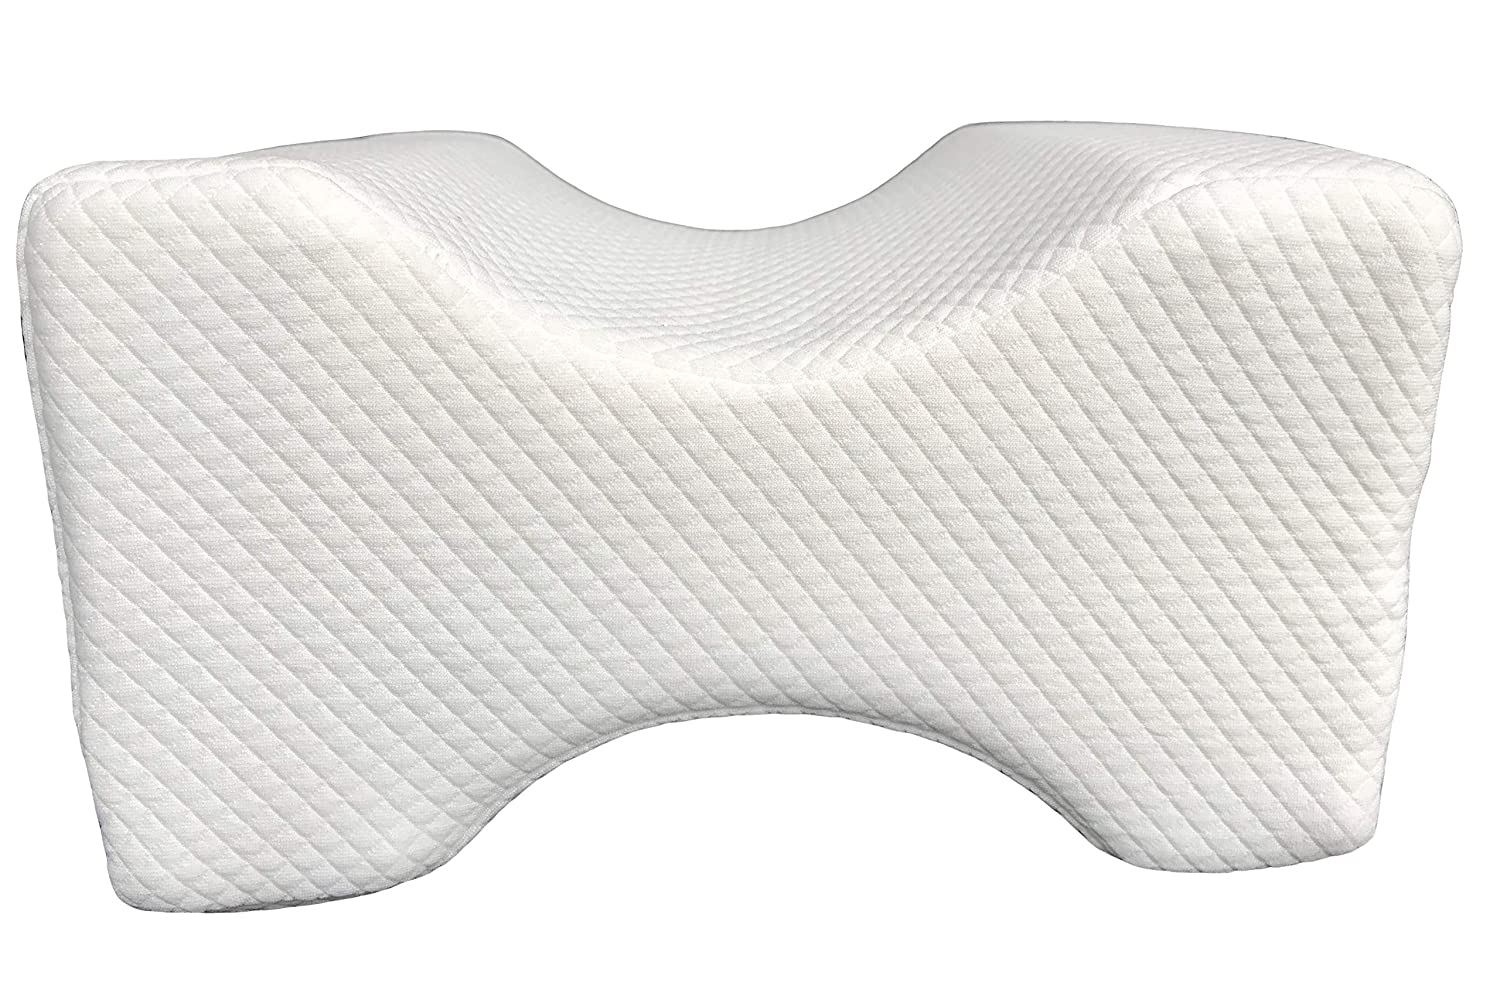 Trustworthy Brand of Knee Pillow for Better Sleep